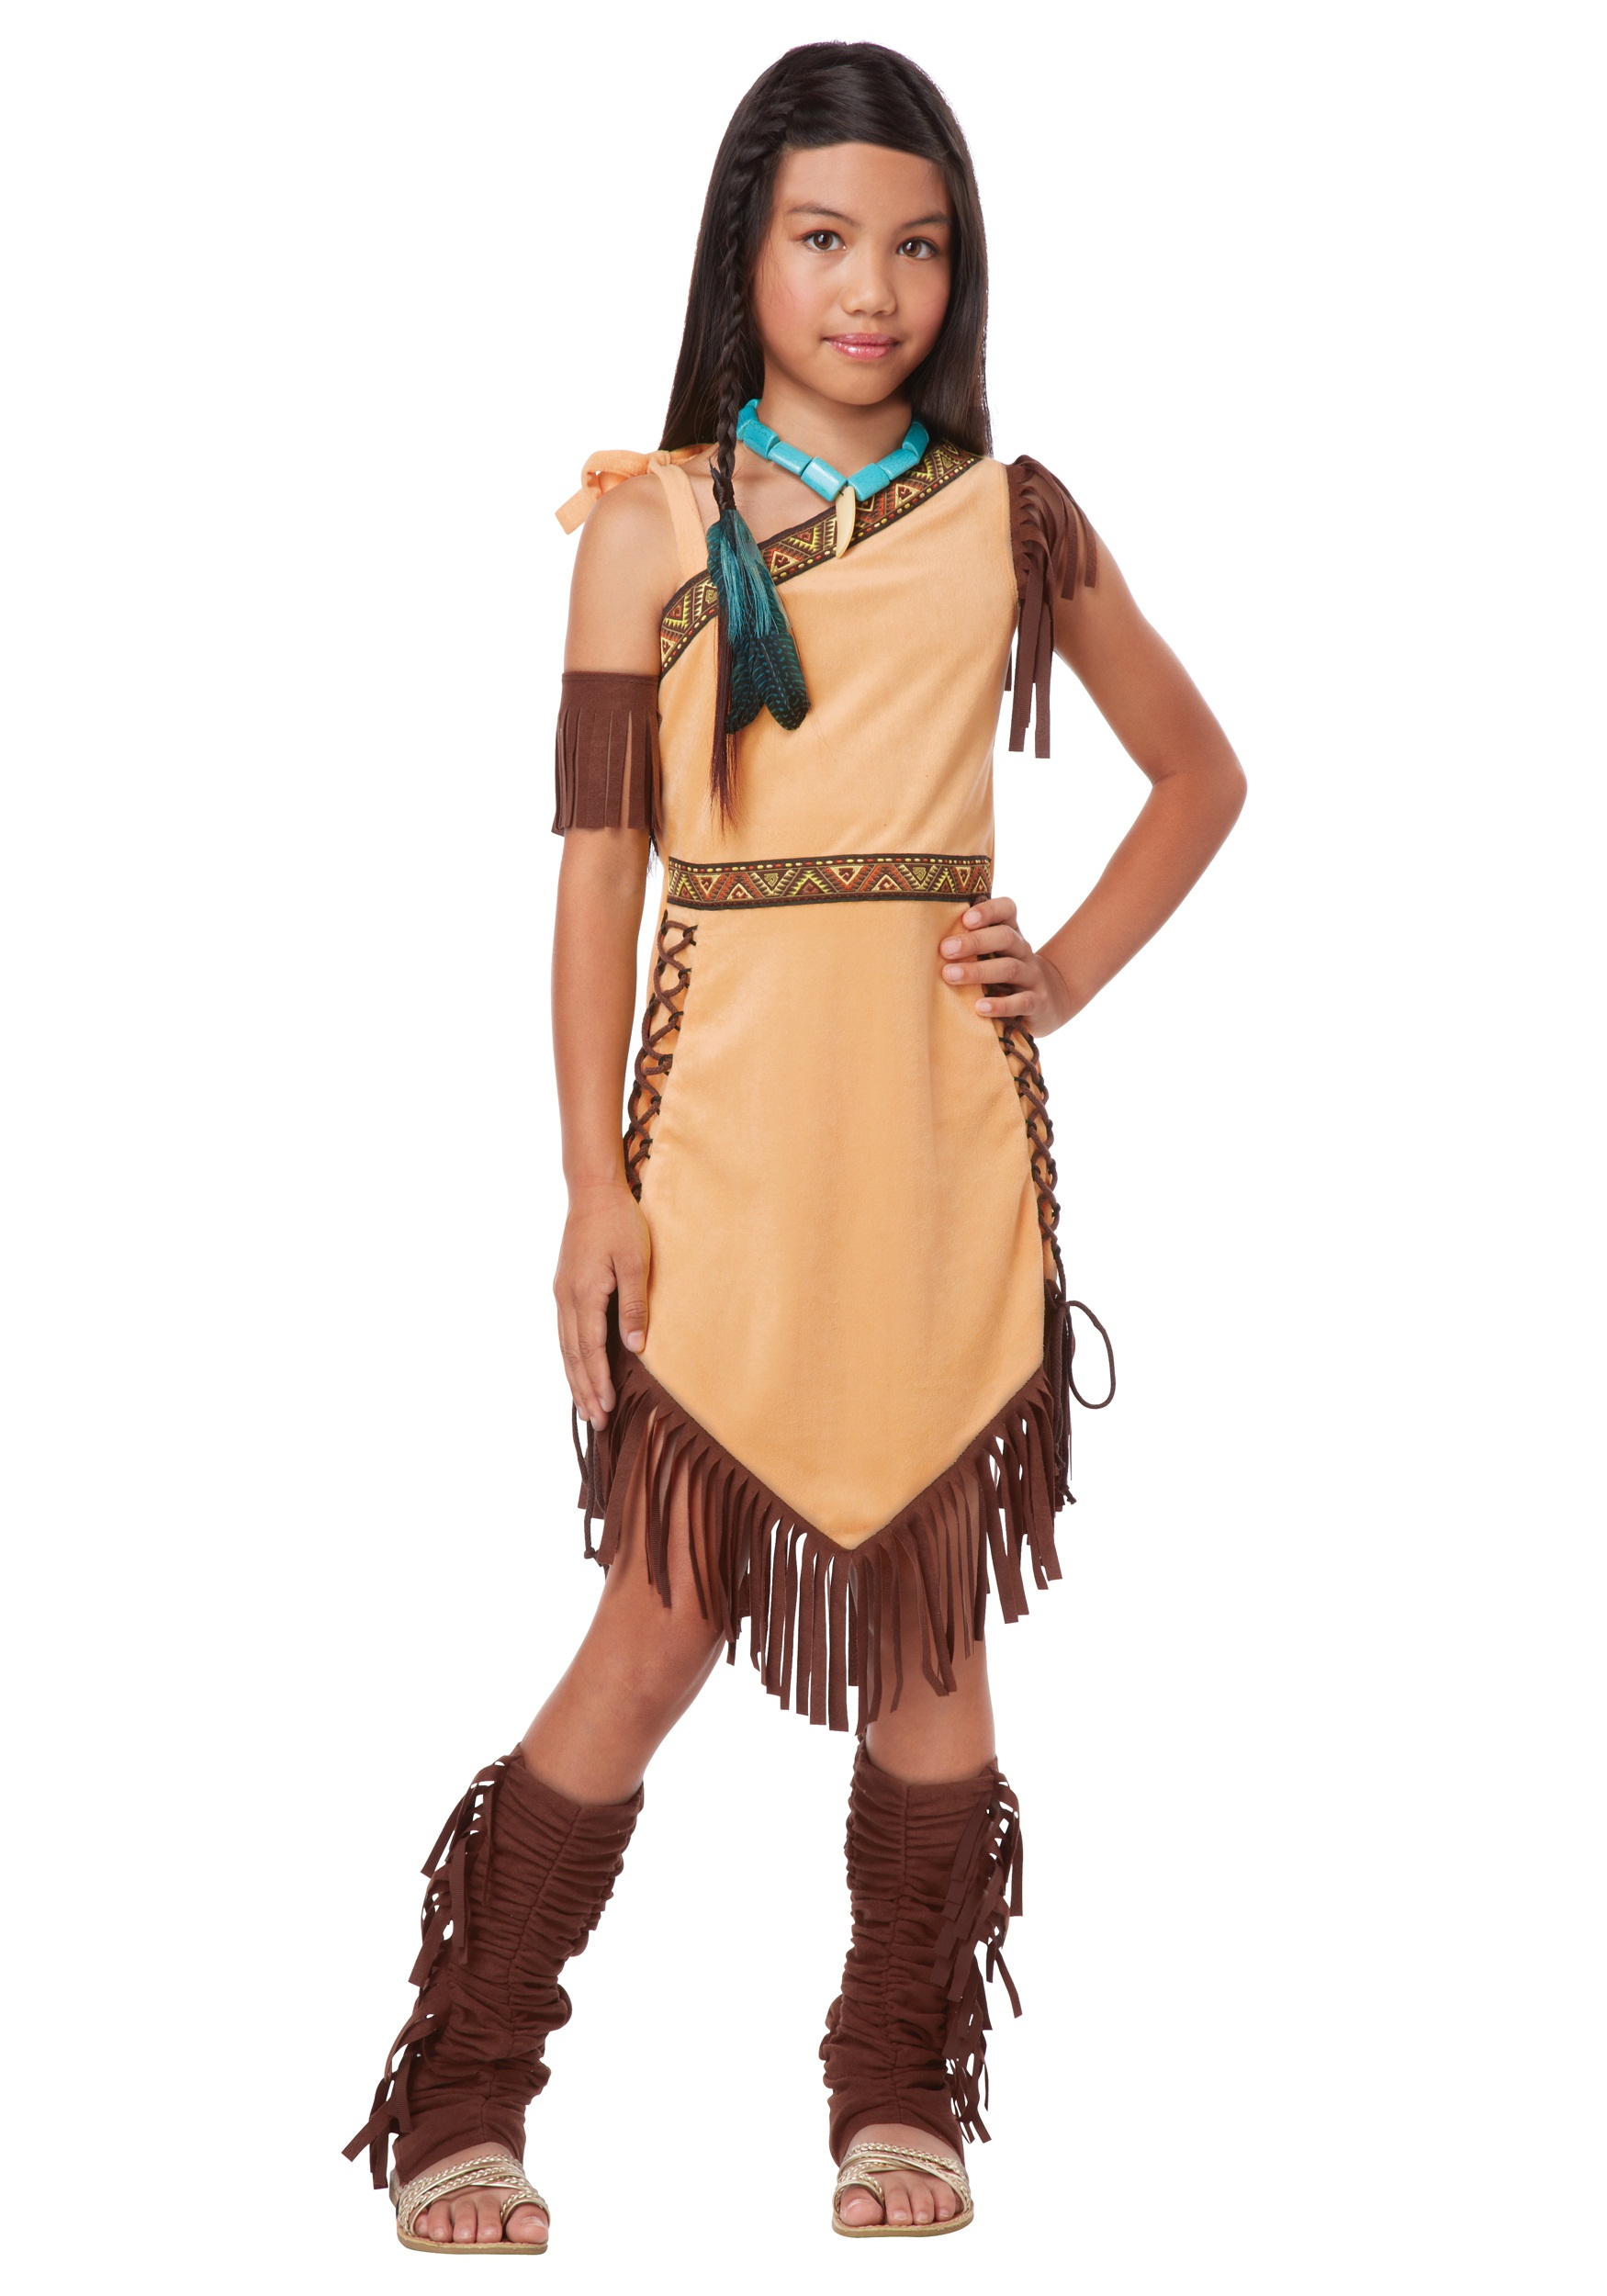 Dress up as natives